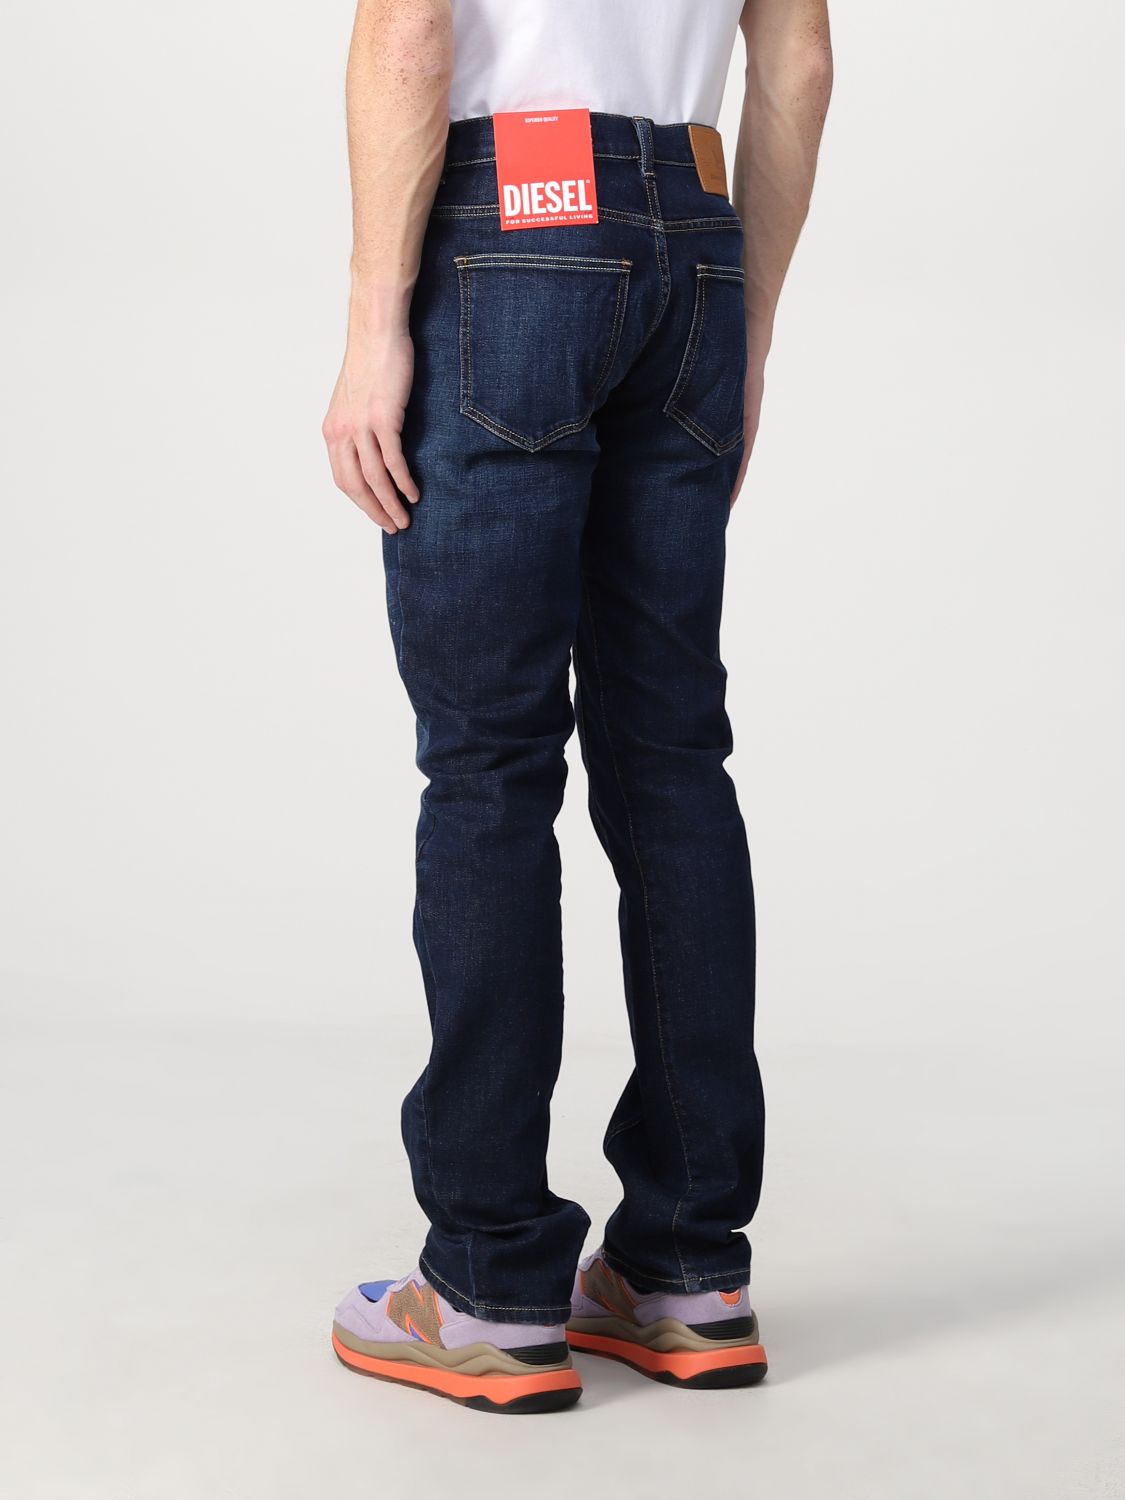 DIESEL: Jeans hombre, Denim | Jeans A0414209B90 en línea en GIGLIO.COM